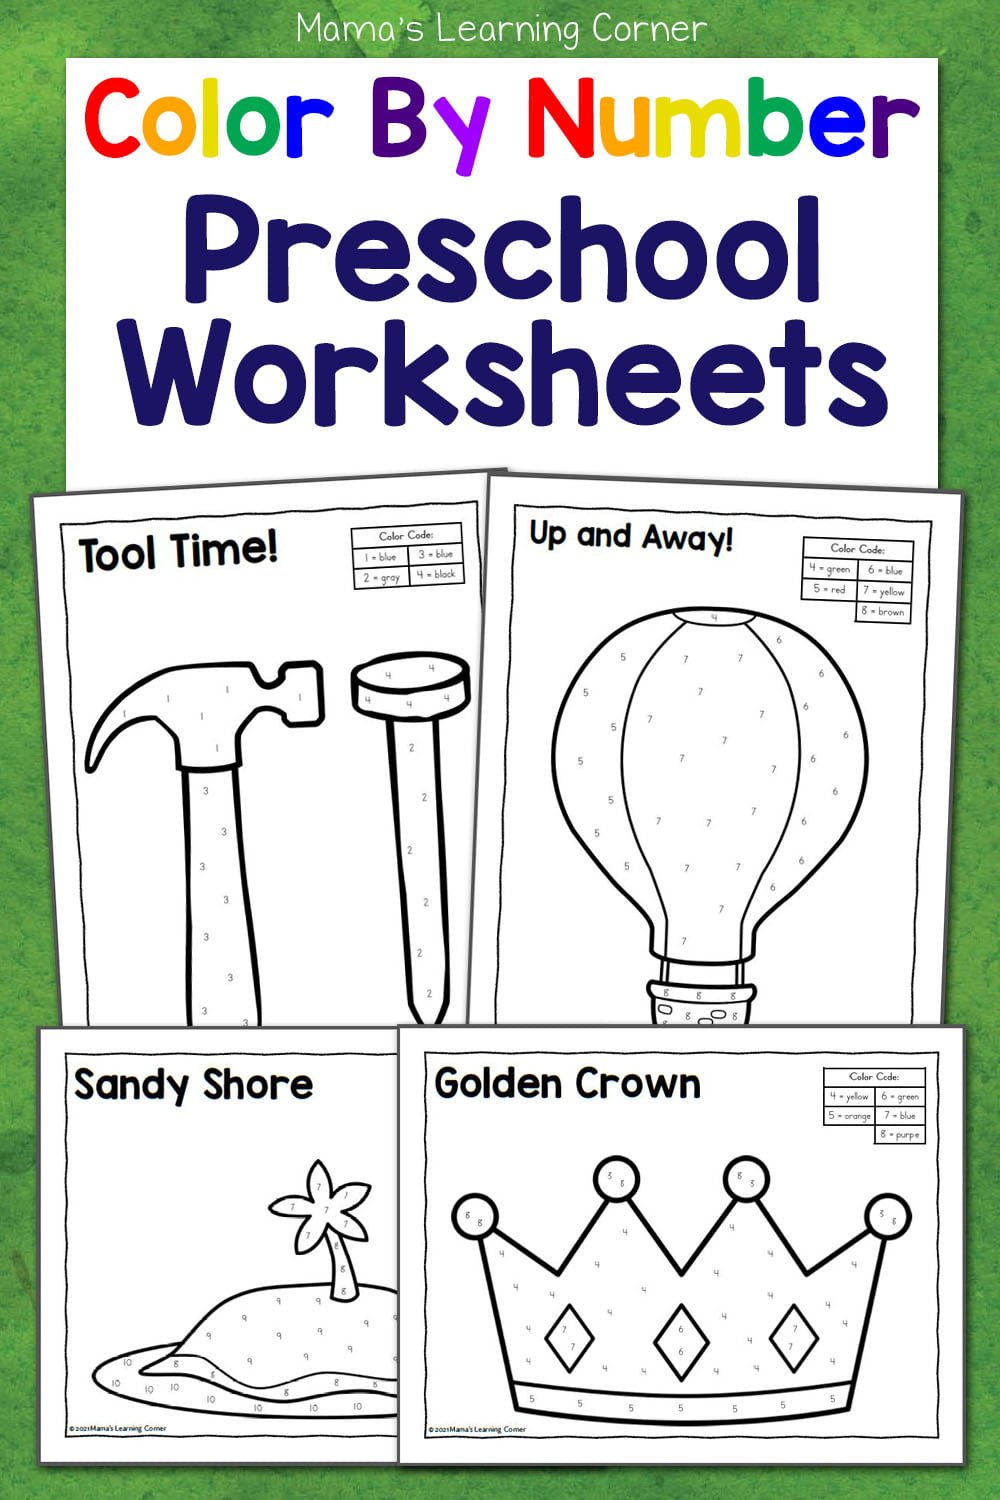 Color By Number Preschool Worksheets